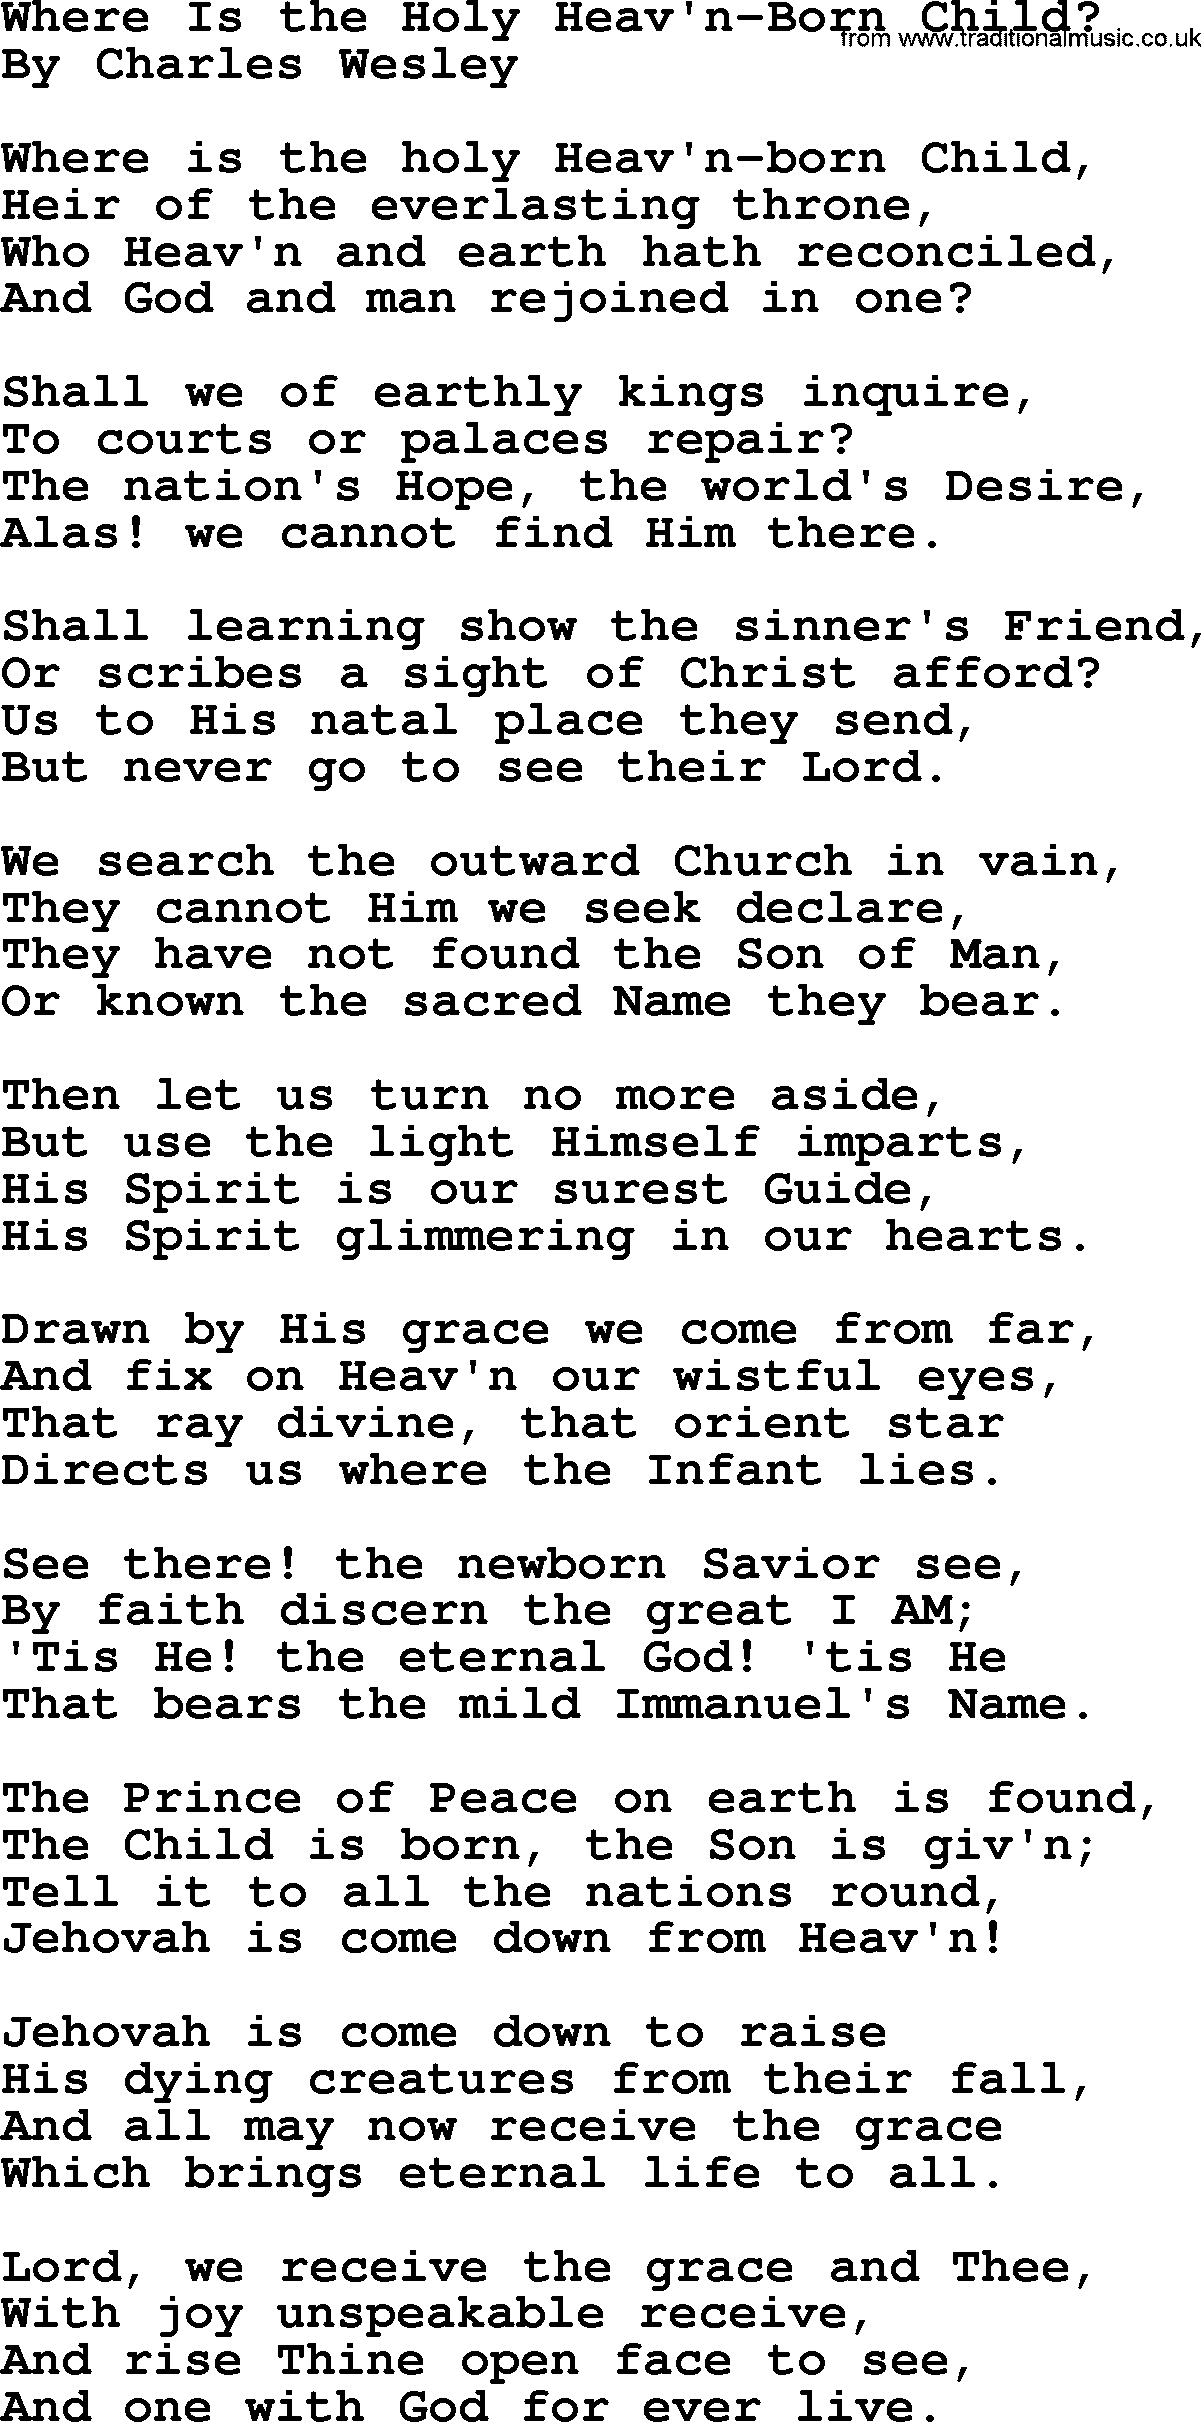 Charles Wesley hymn: Where Is the Holy Heav'n-Born Child_, lyrics